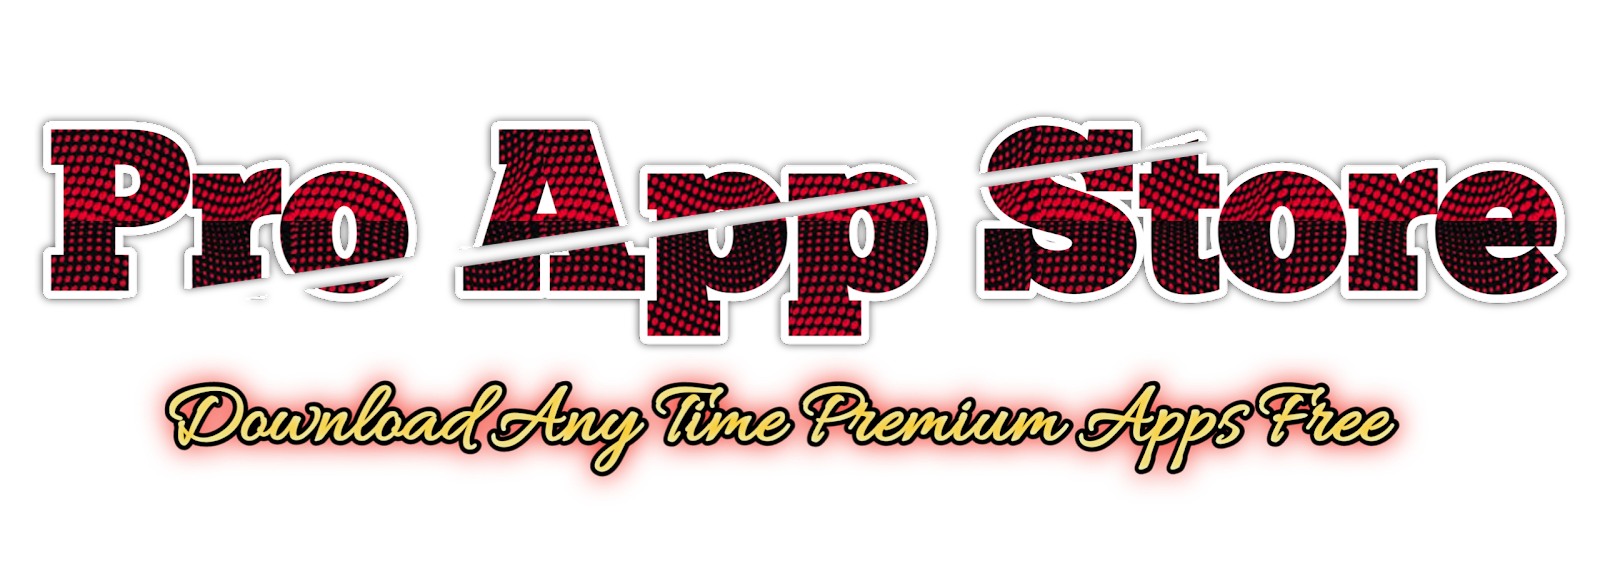 Pro App Store